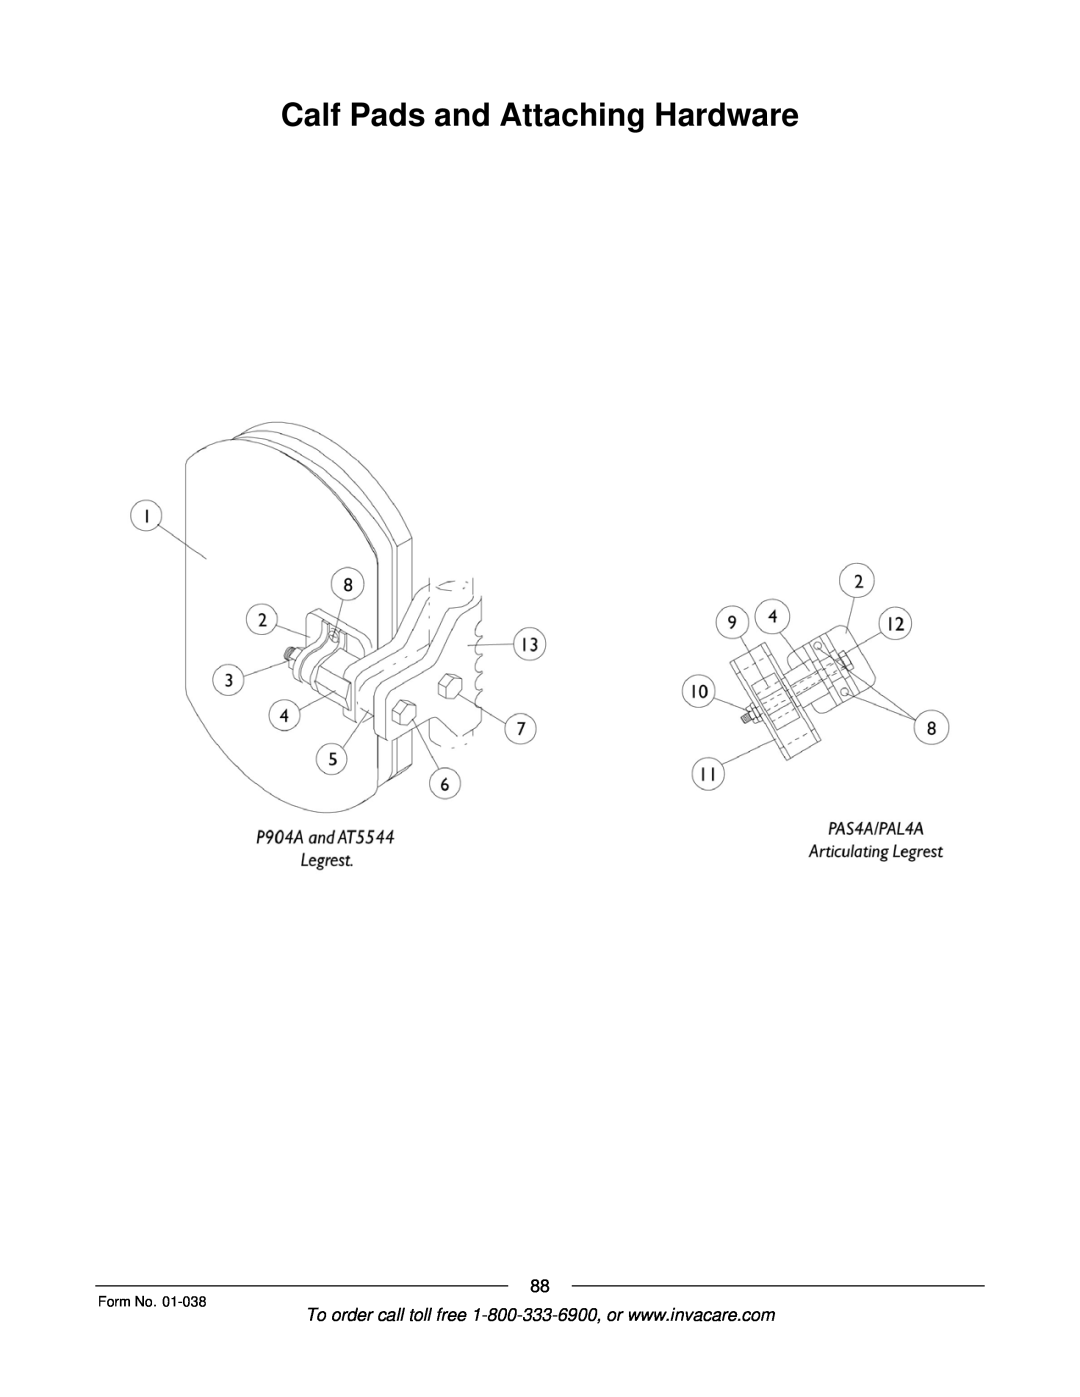 Invacare ESS-PTO, PTO-STM manual Calf Pads and Attaching Hardware, Form No 